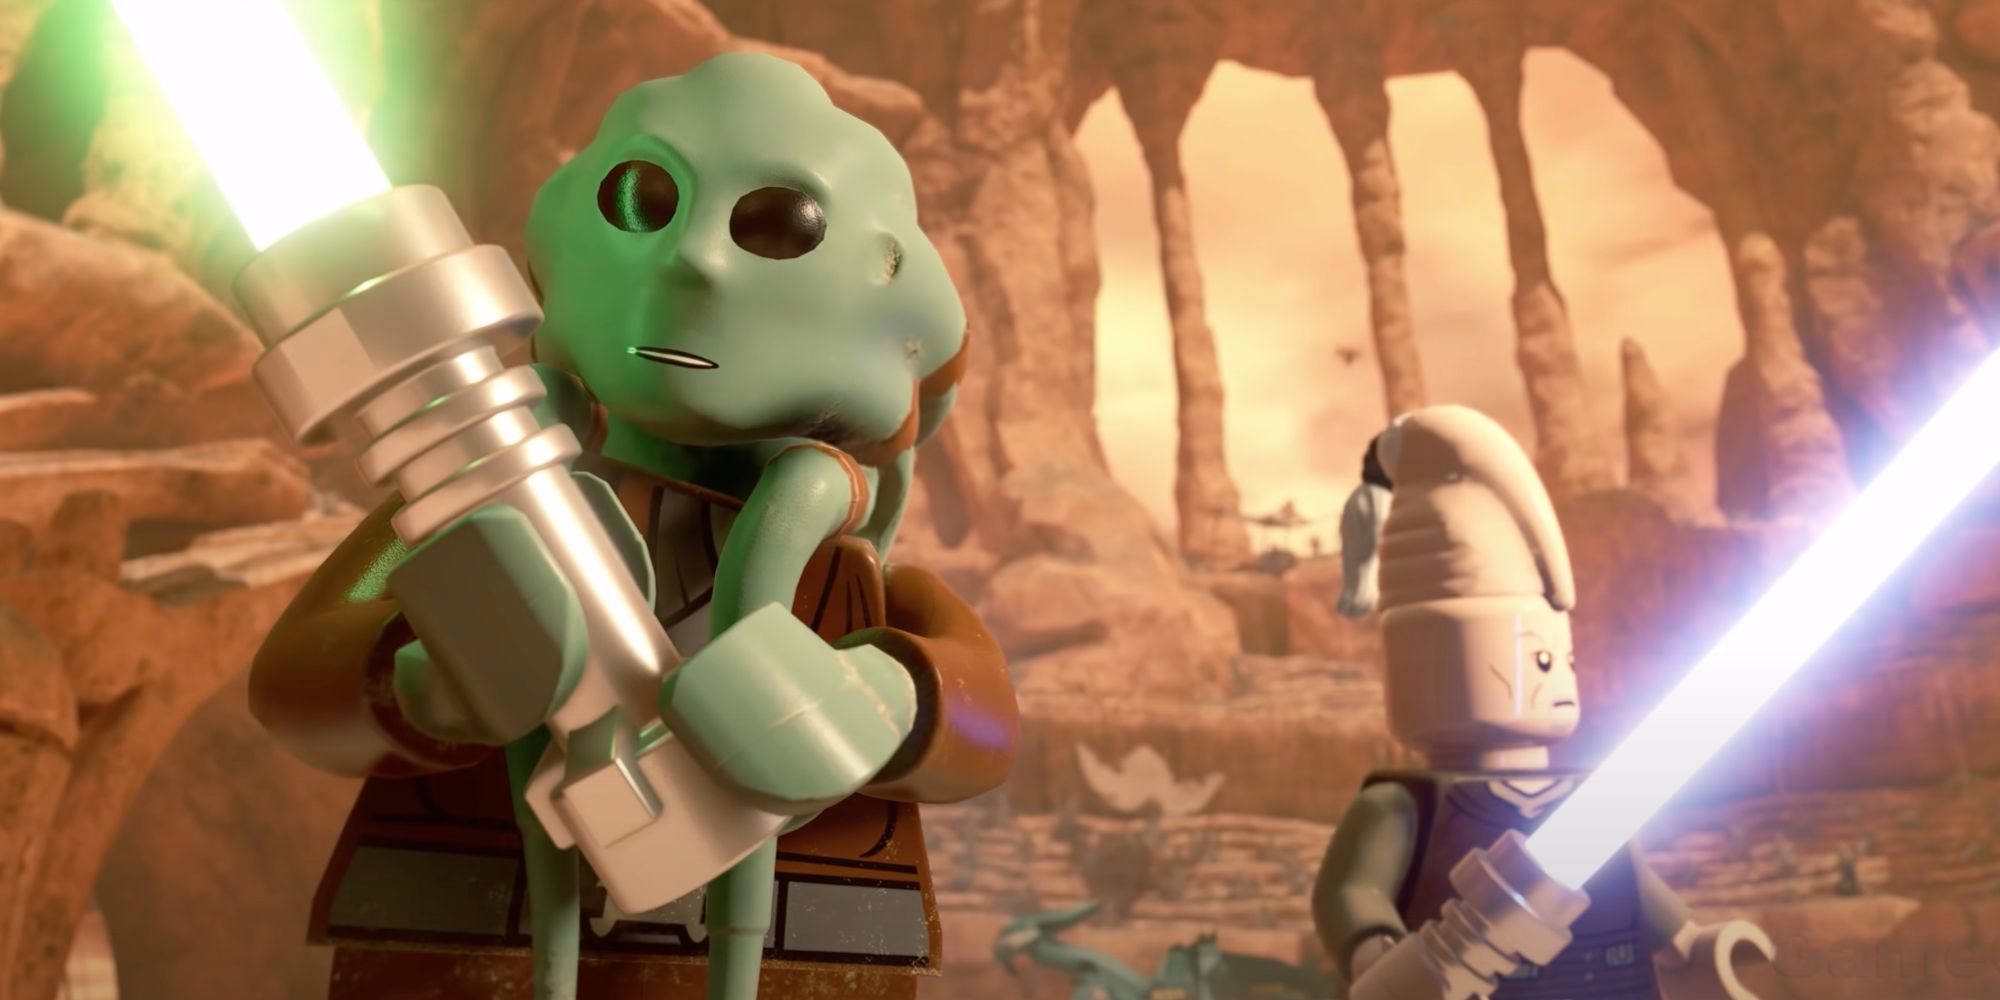 LEGO Star Wars arregla el terrible final de El ataque de los clones